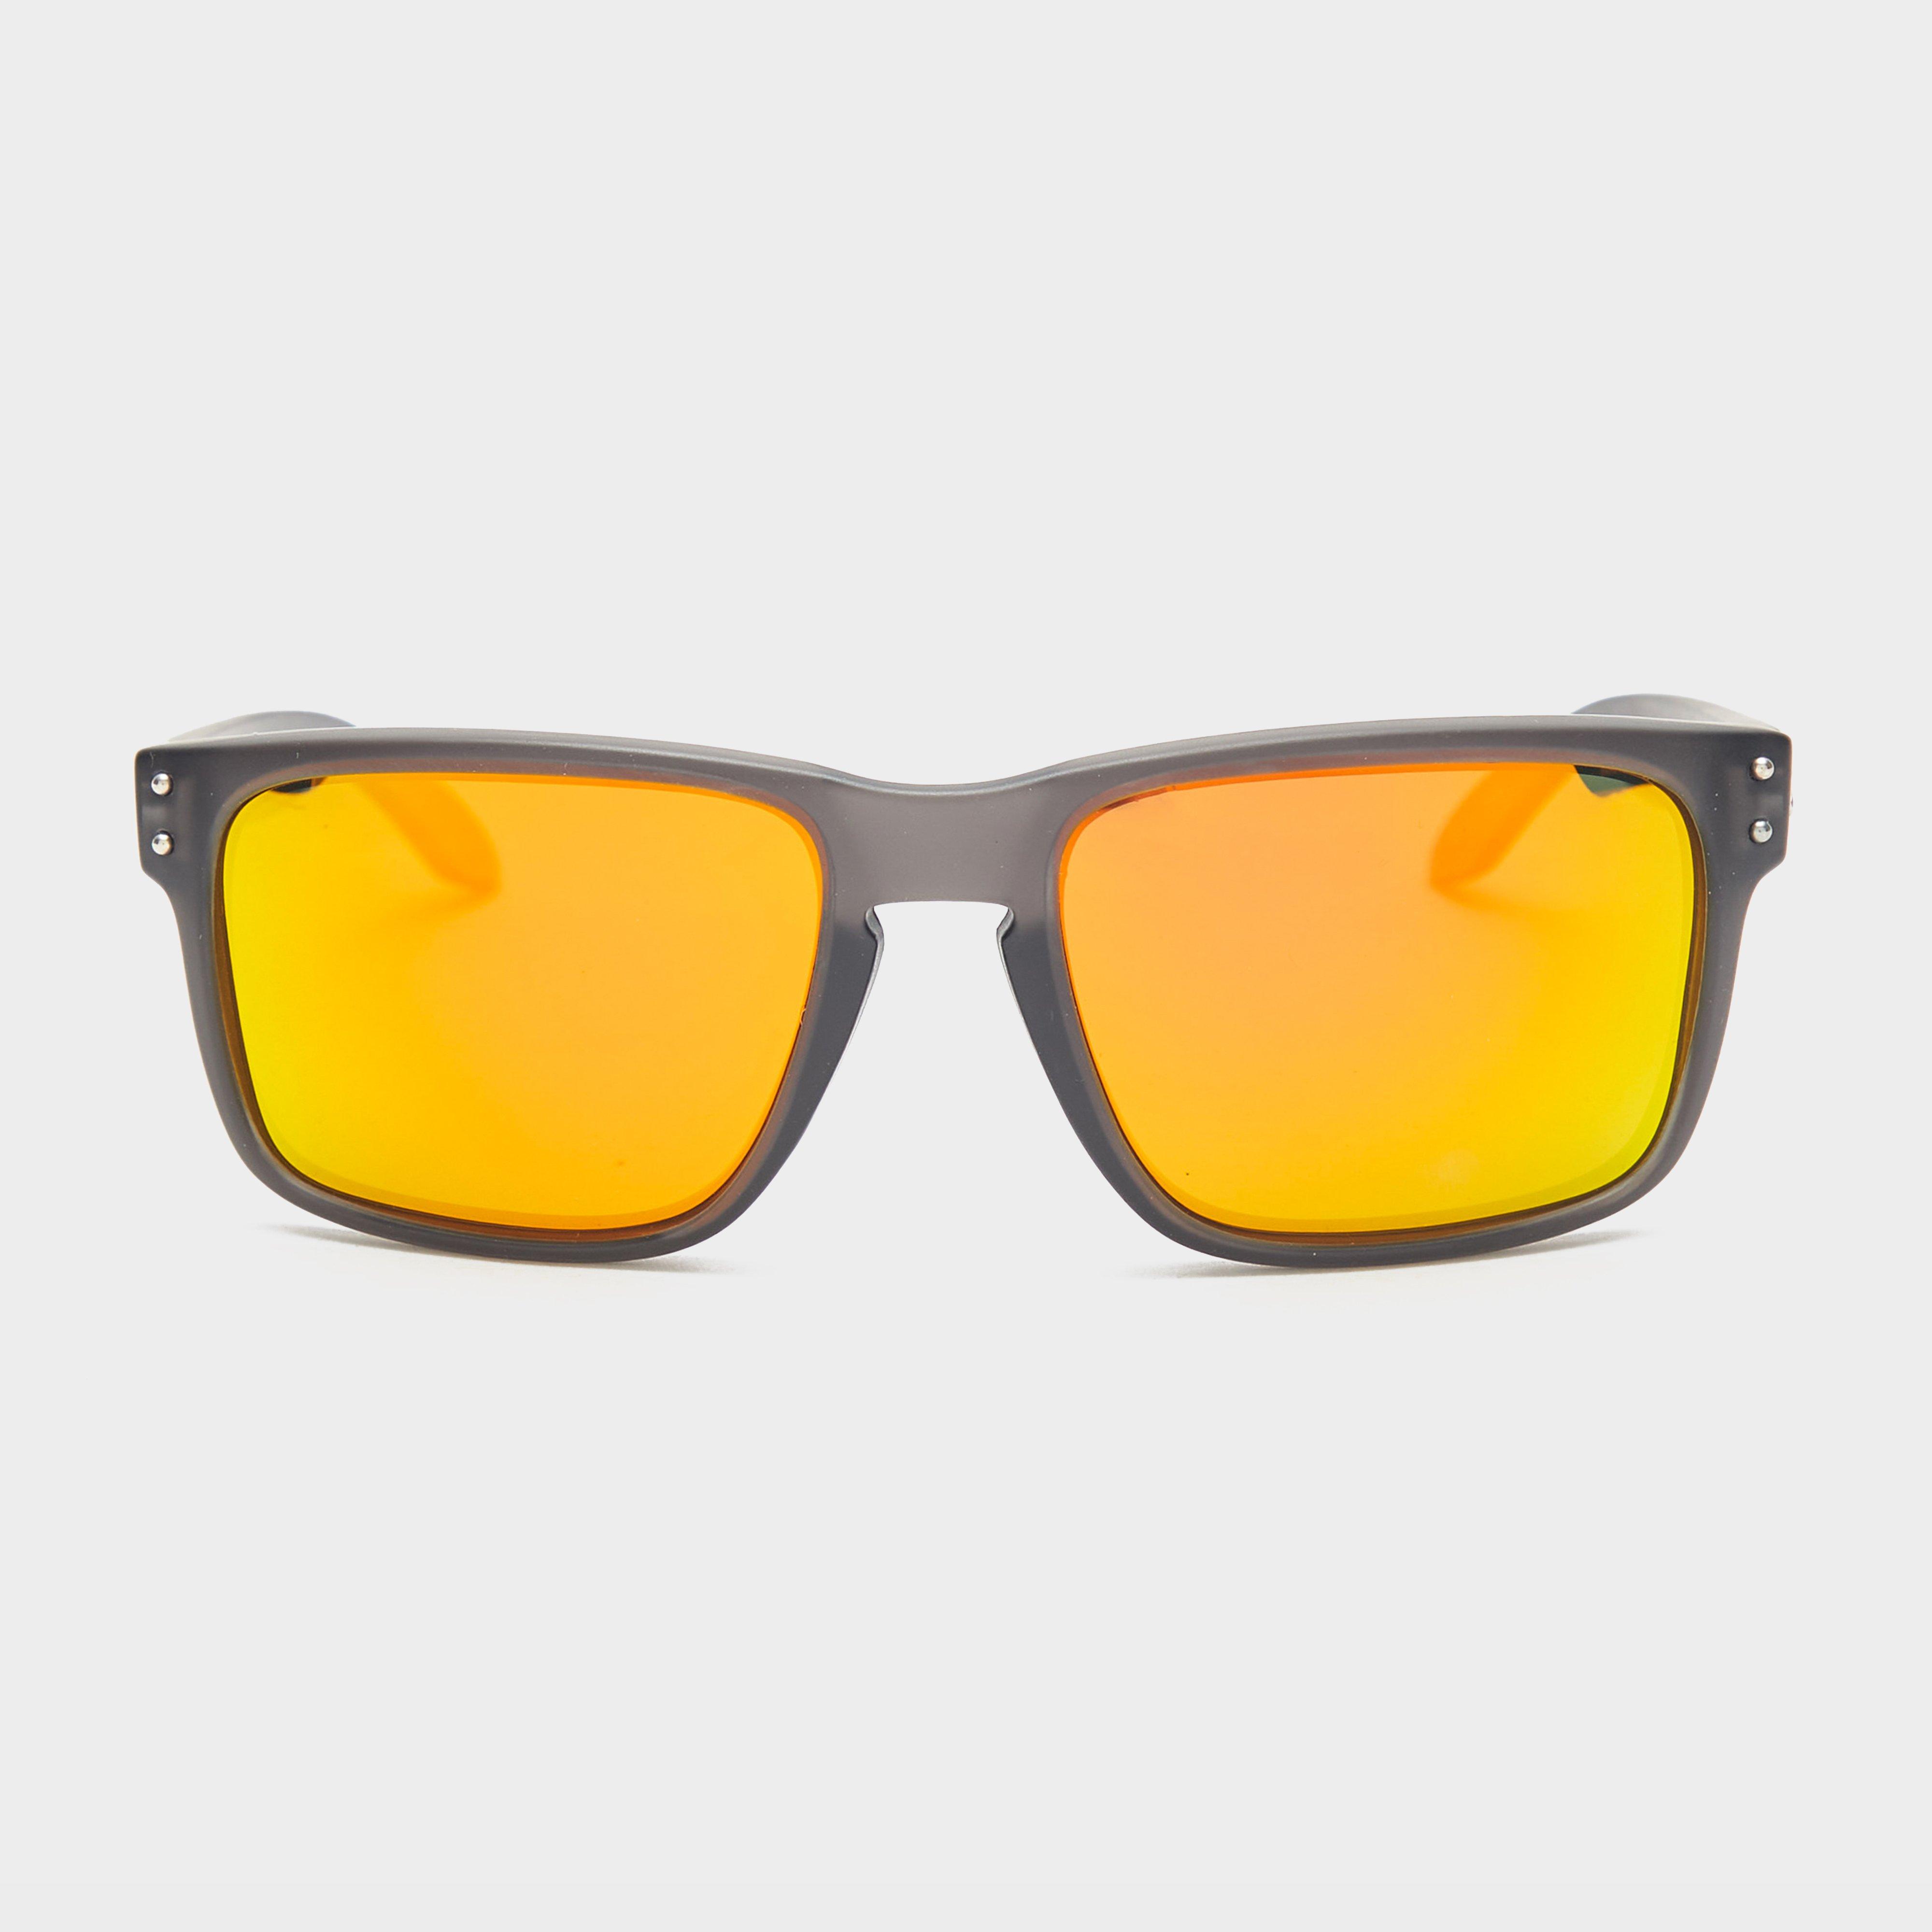  FORTIS Bays Fire X Bloc Sunglasses, Multi Coloured